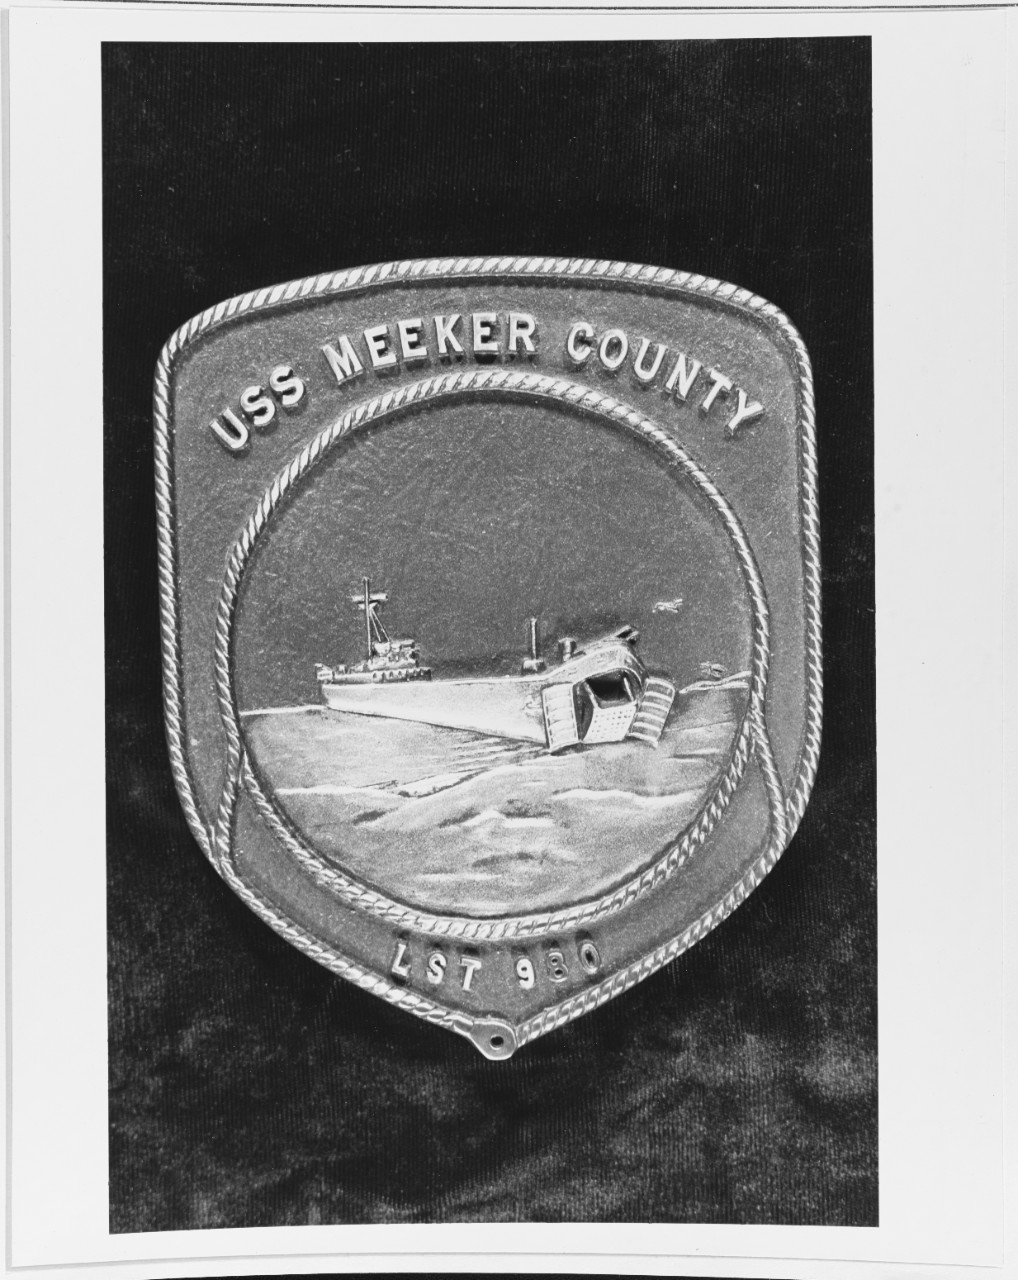 Insignia: USS MEEKER COUNTY (LST-980)